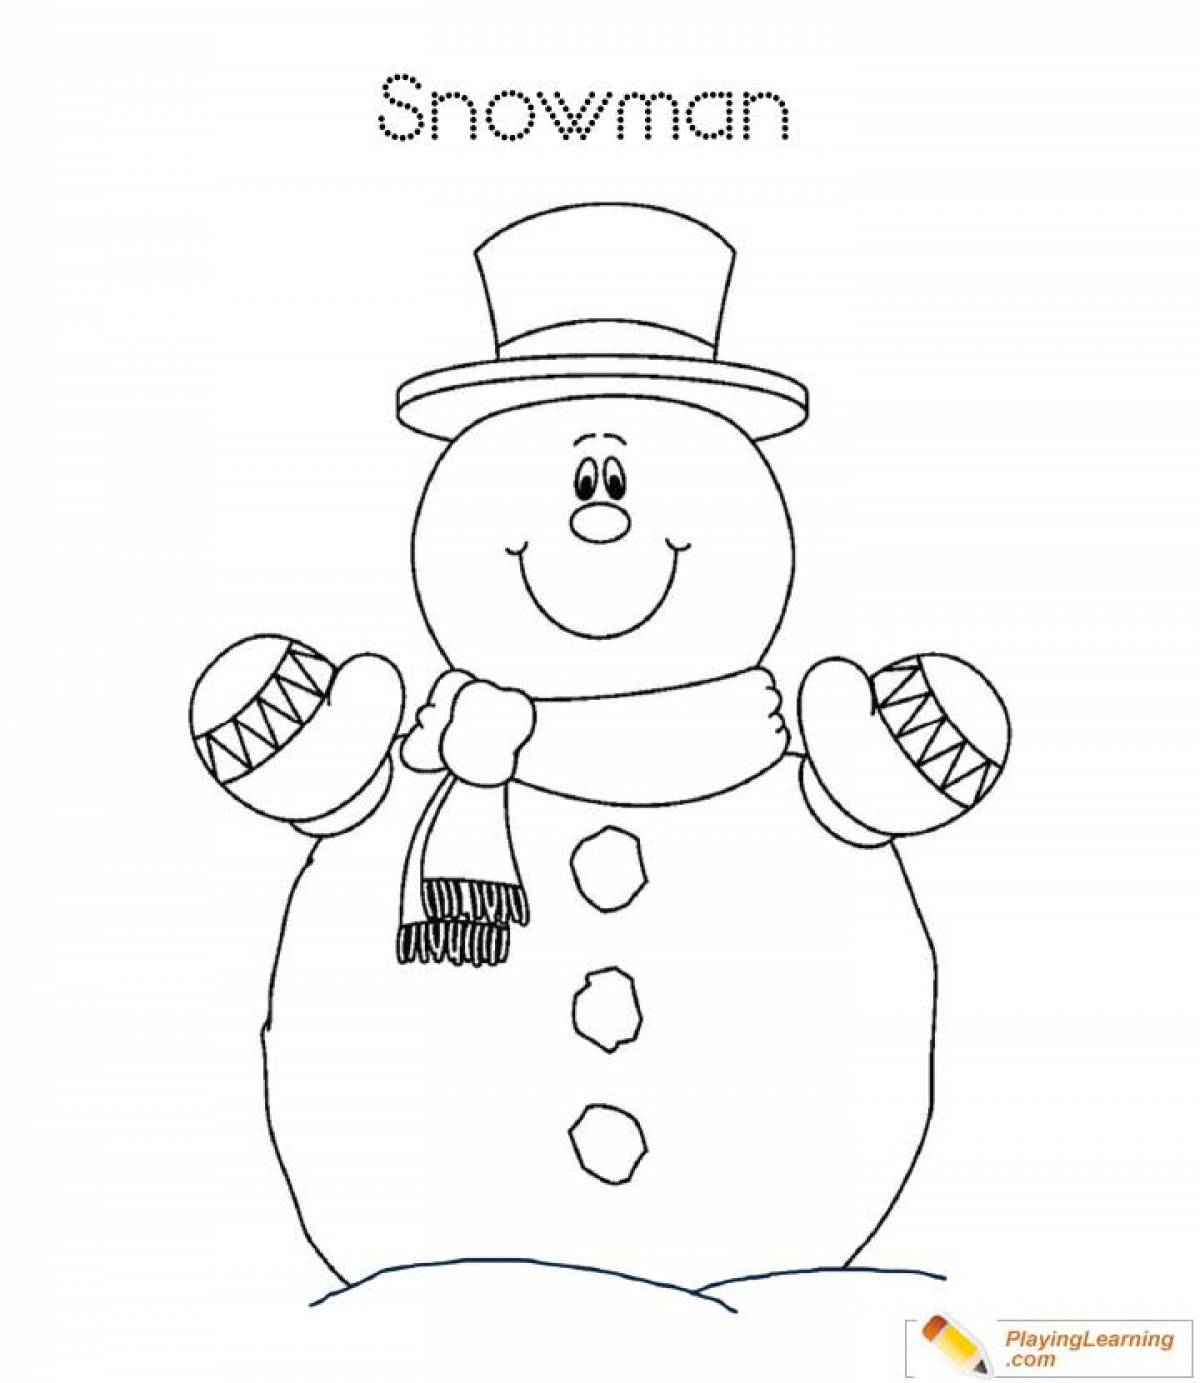 Live coloring snowman for children